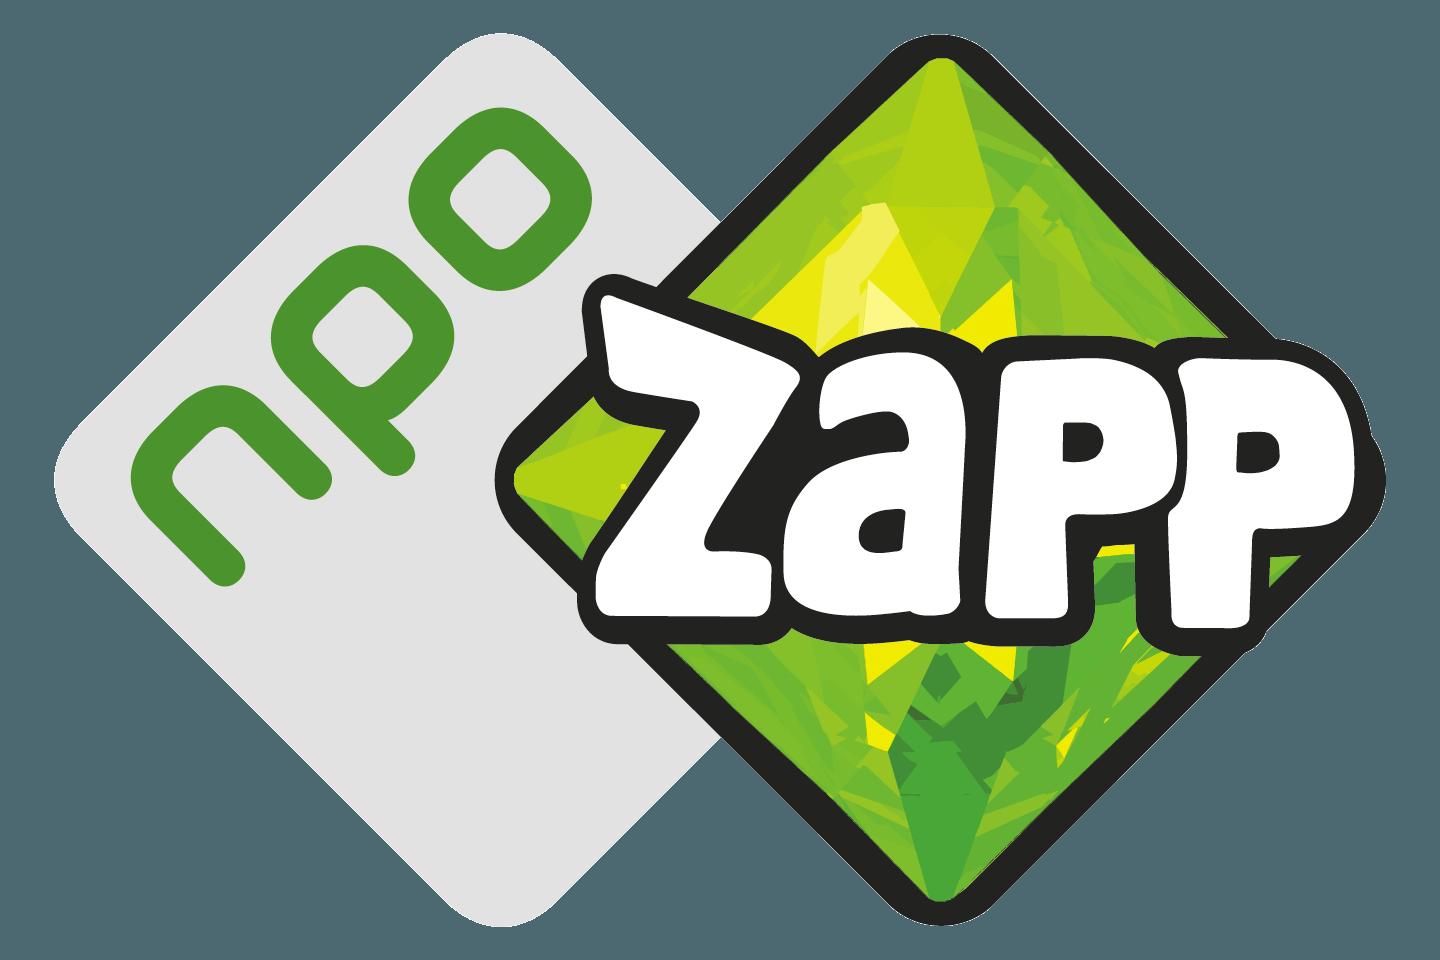 NPO Logo - File:NPO Zapp logo.png